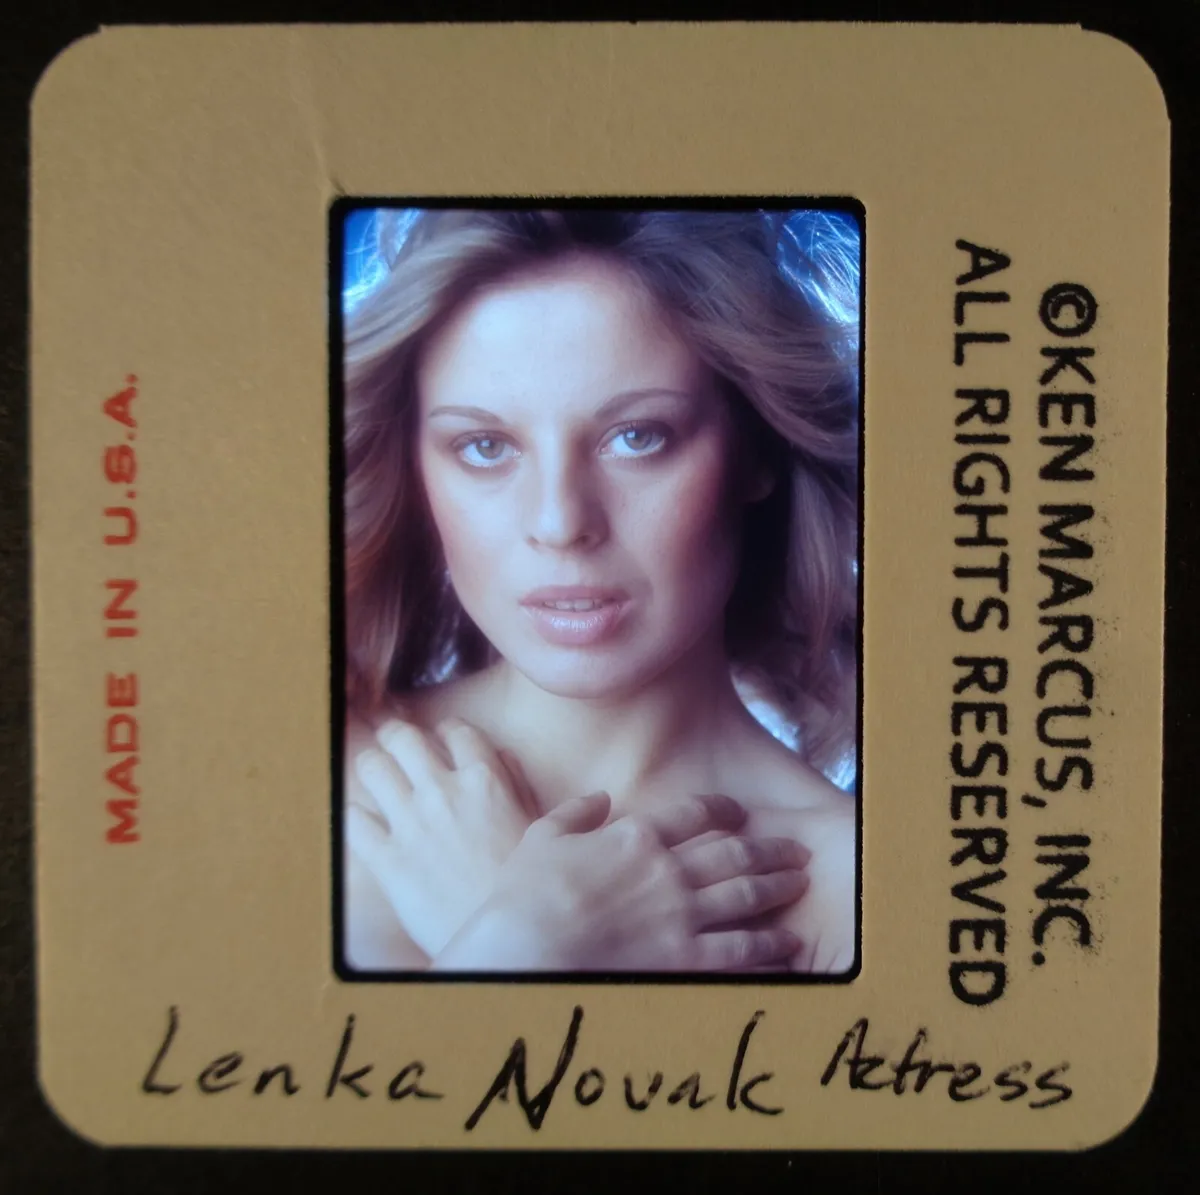 amanda skillings recommends Lenka Novak